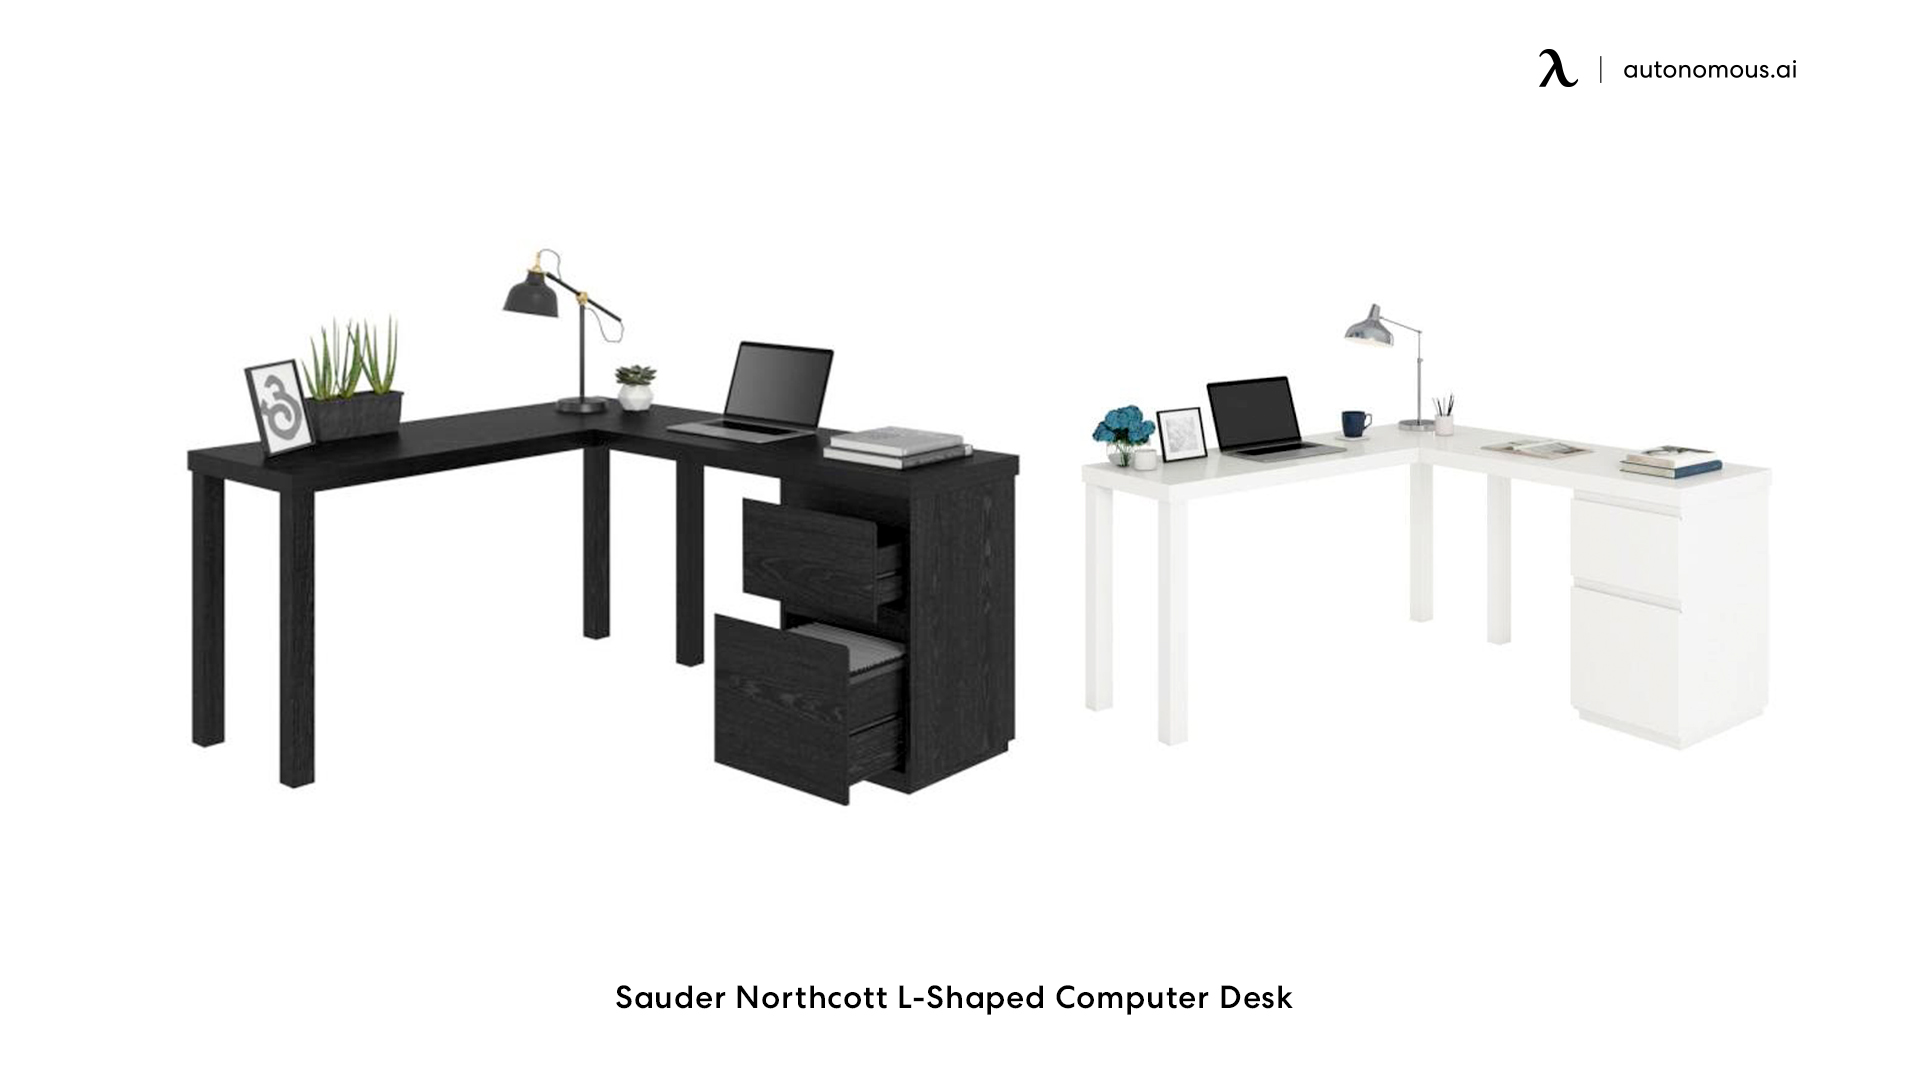 Sauder Northcott L-Shaped Computer Desk